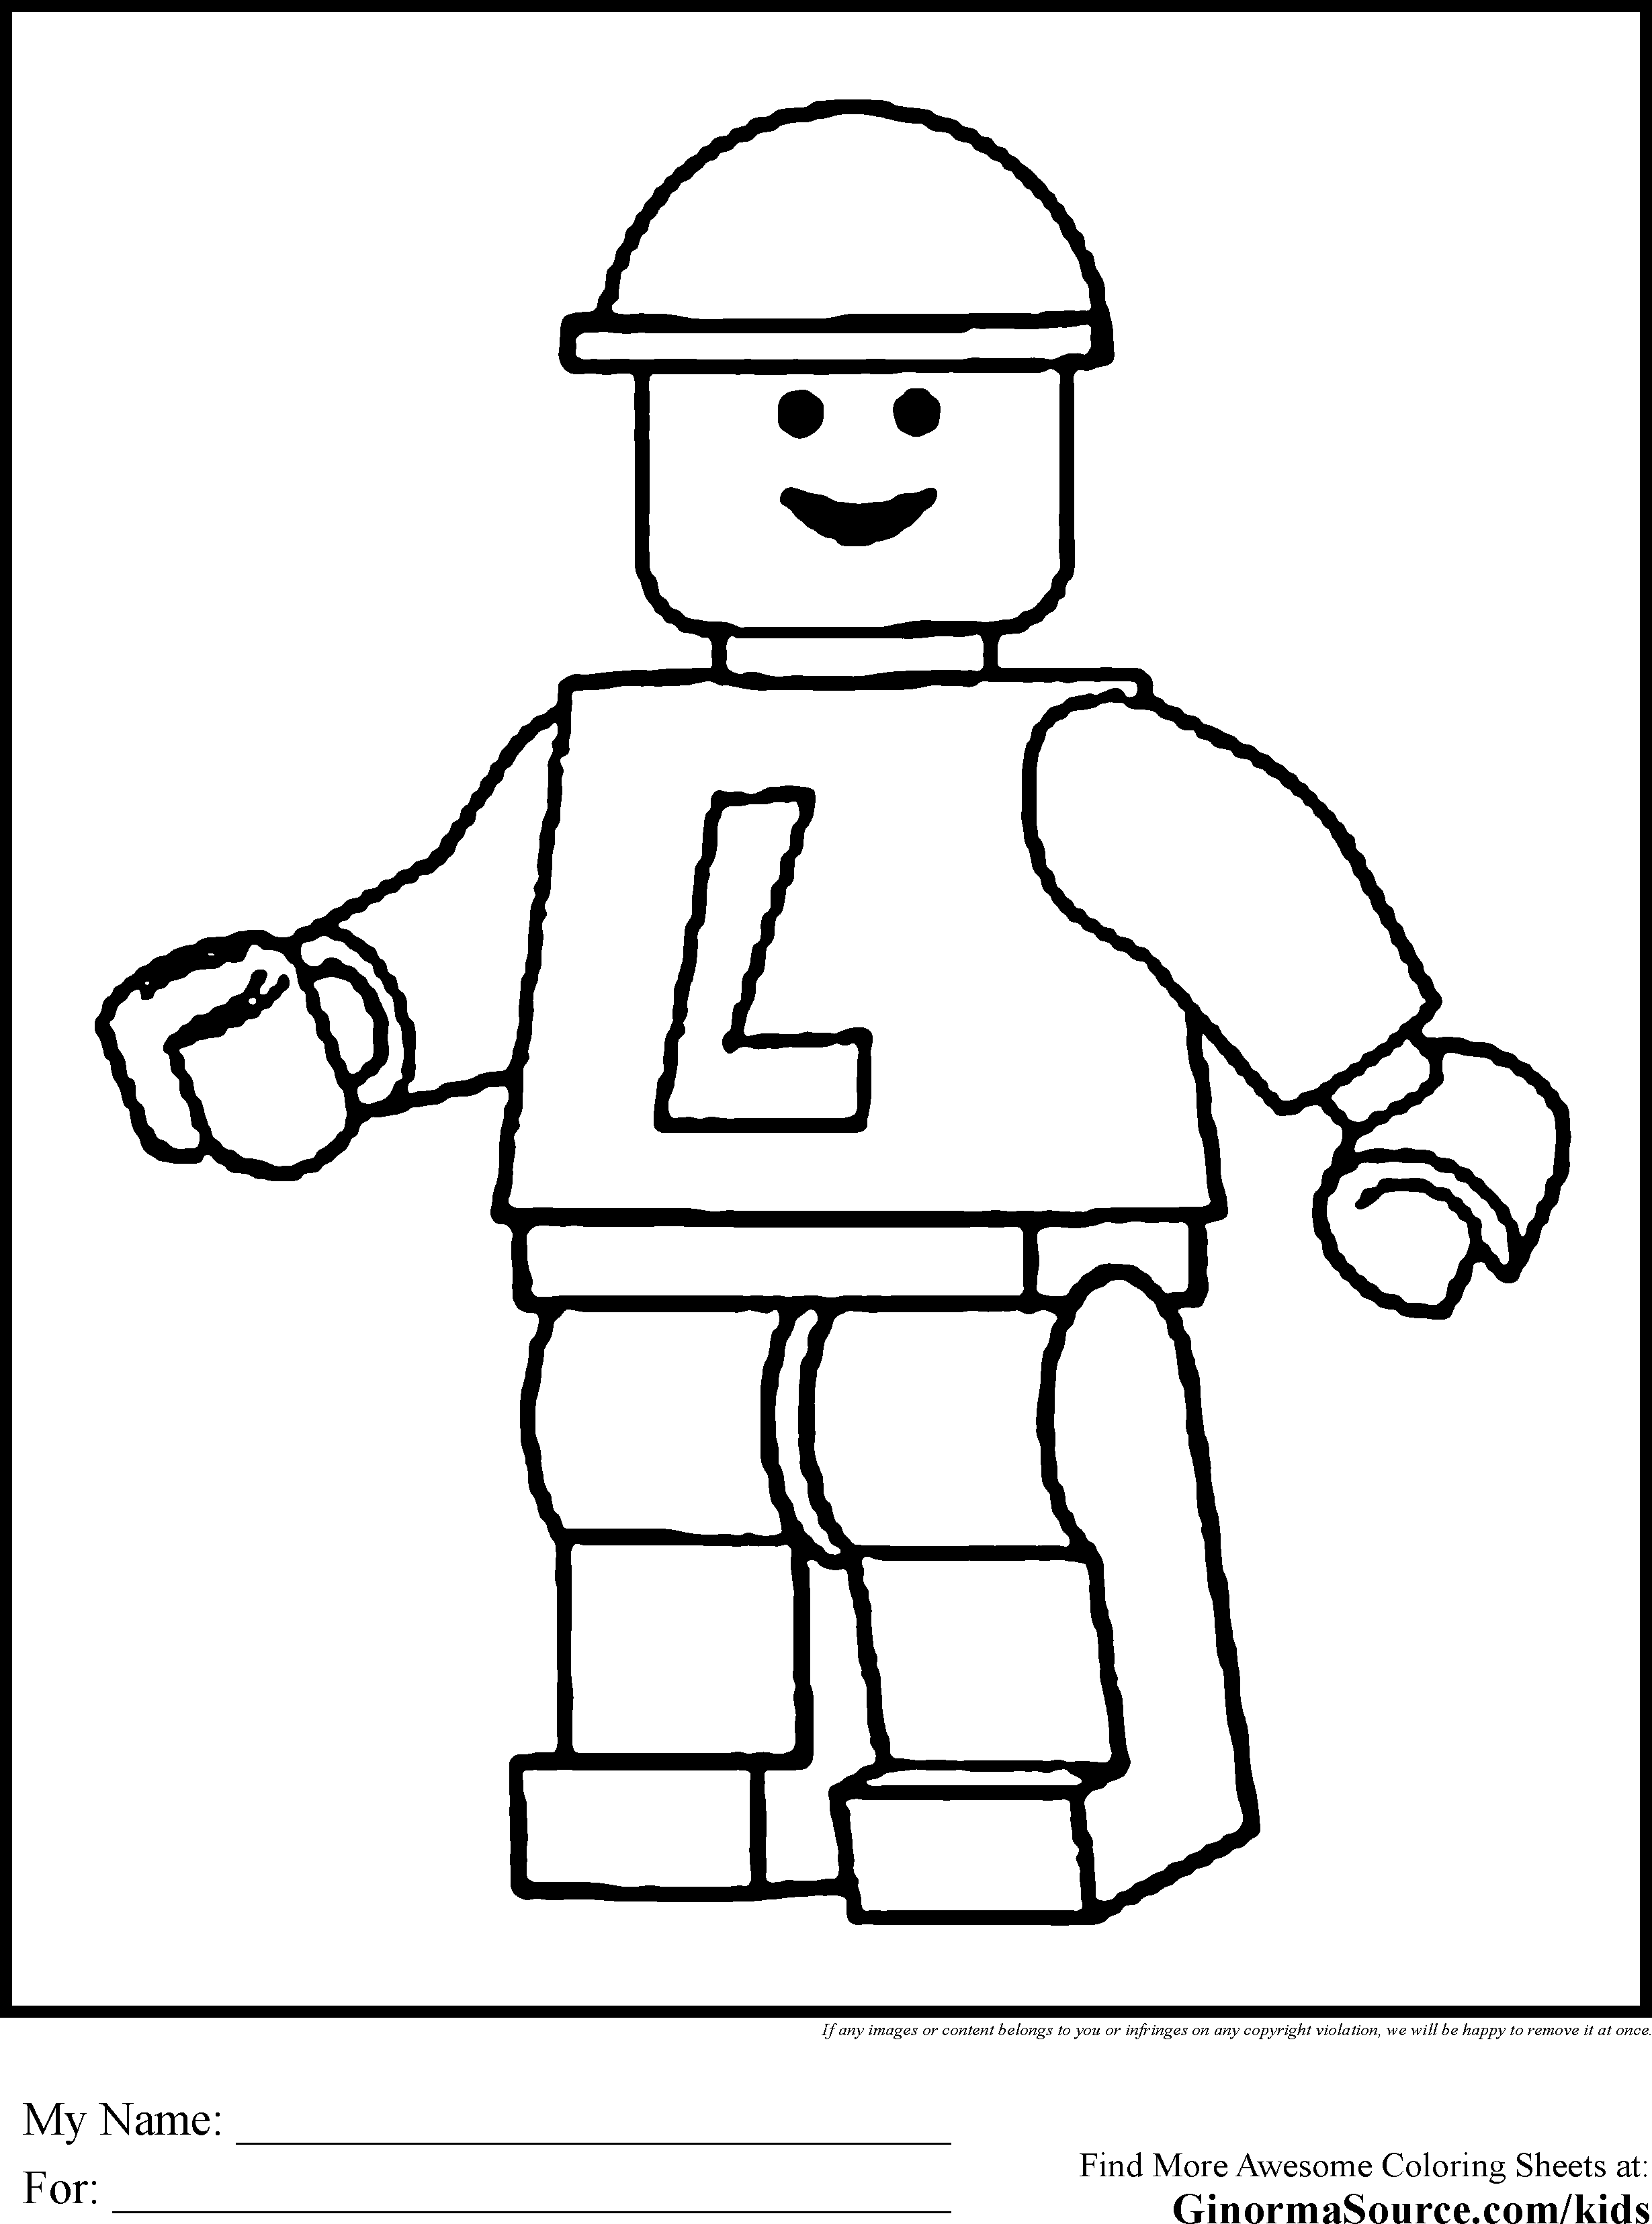 Lego-Coloring-Pages-Legoman.gif 2,459×3,310 pixels | Lego ...